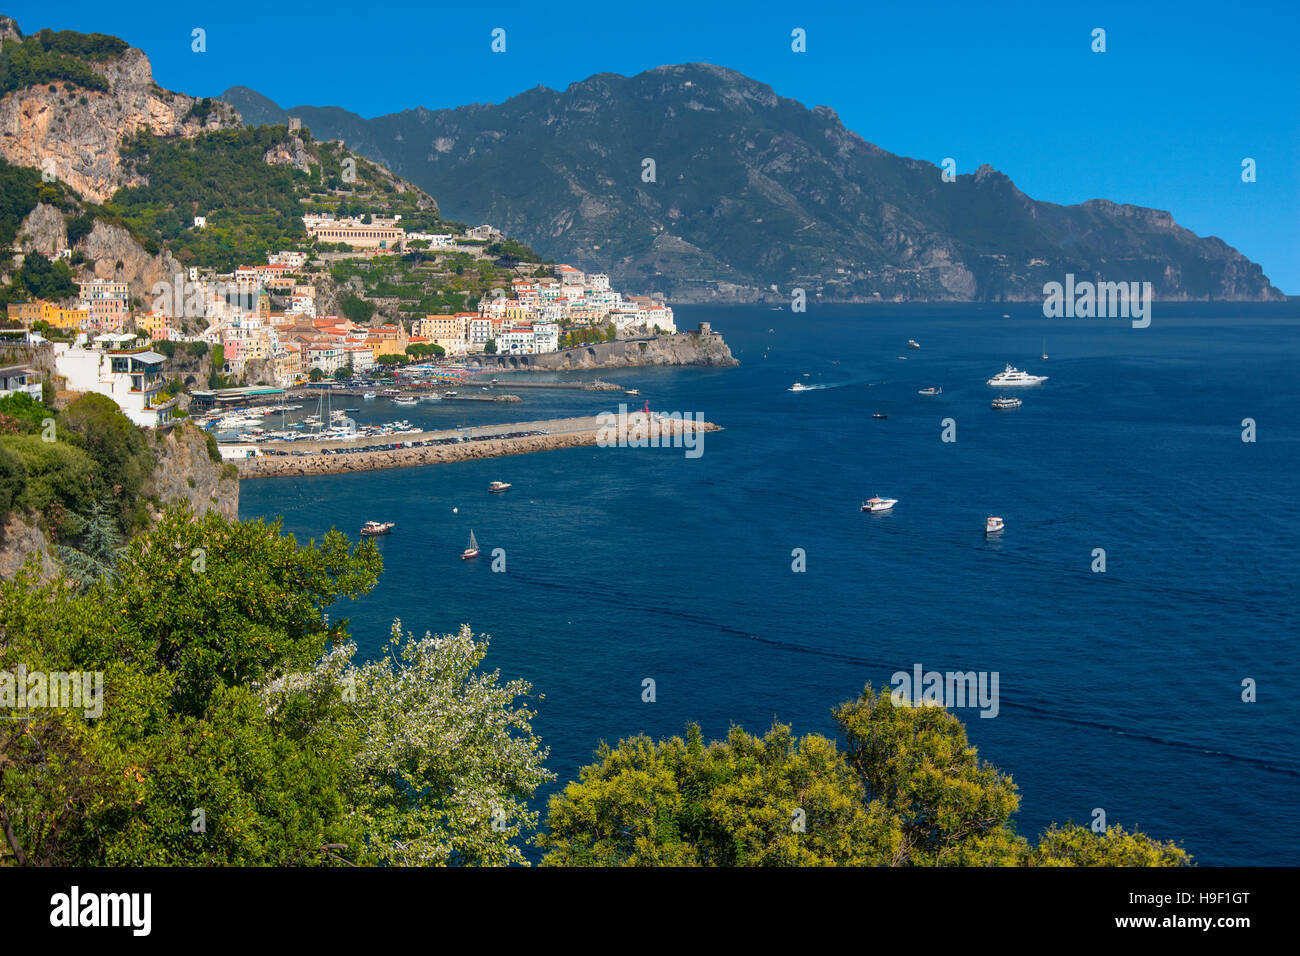 La ciudad de Amalfi a lo largo de la costa de Amalfi, Campania, Italia Foto de stock